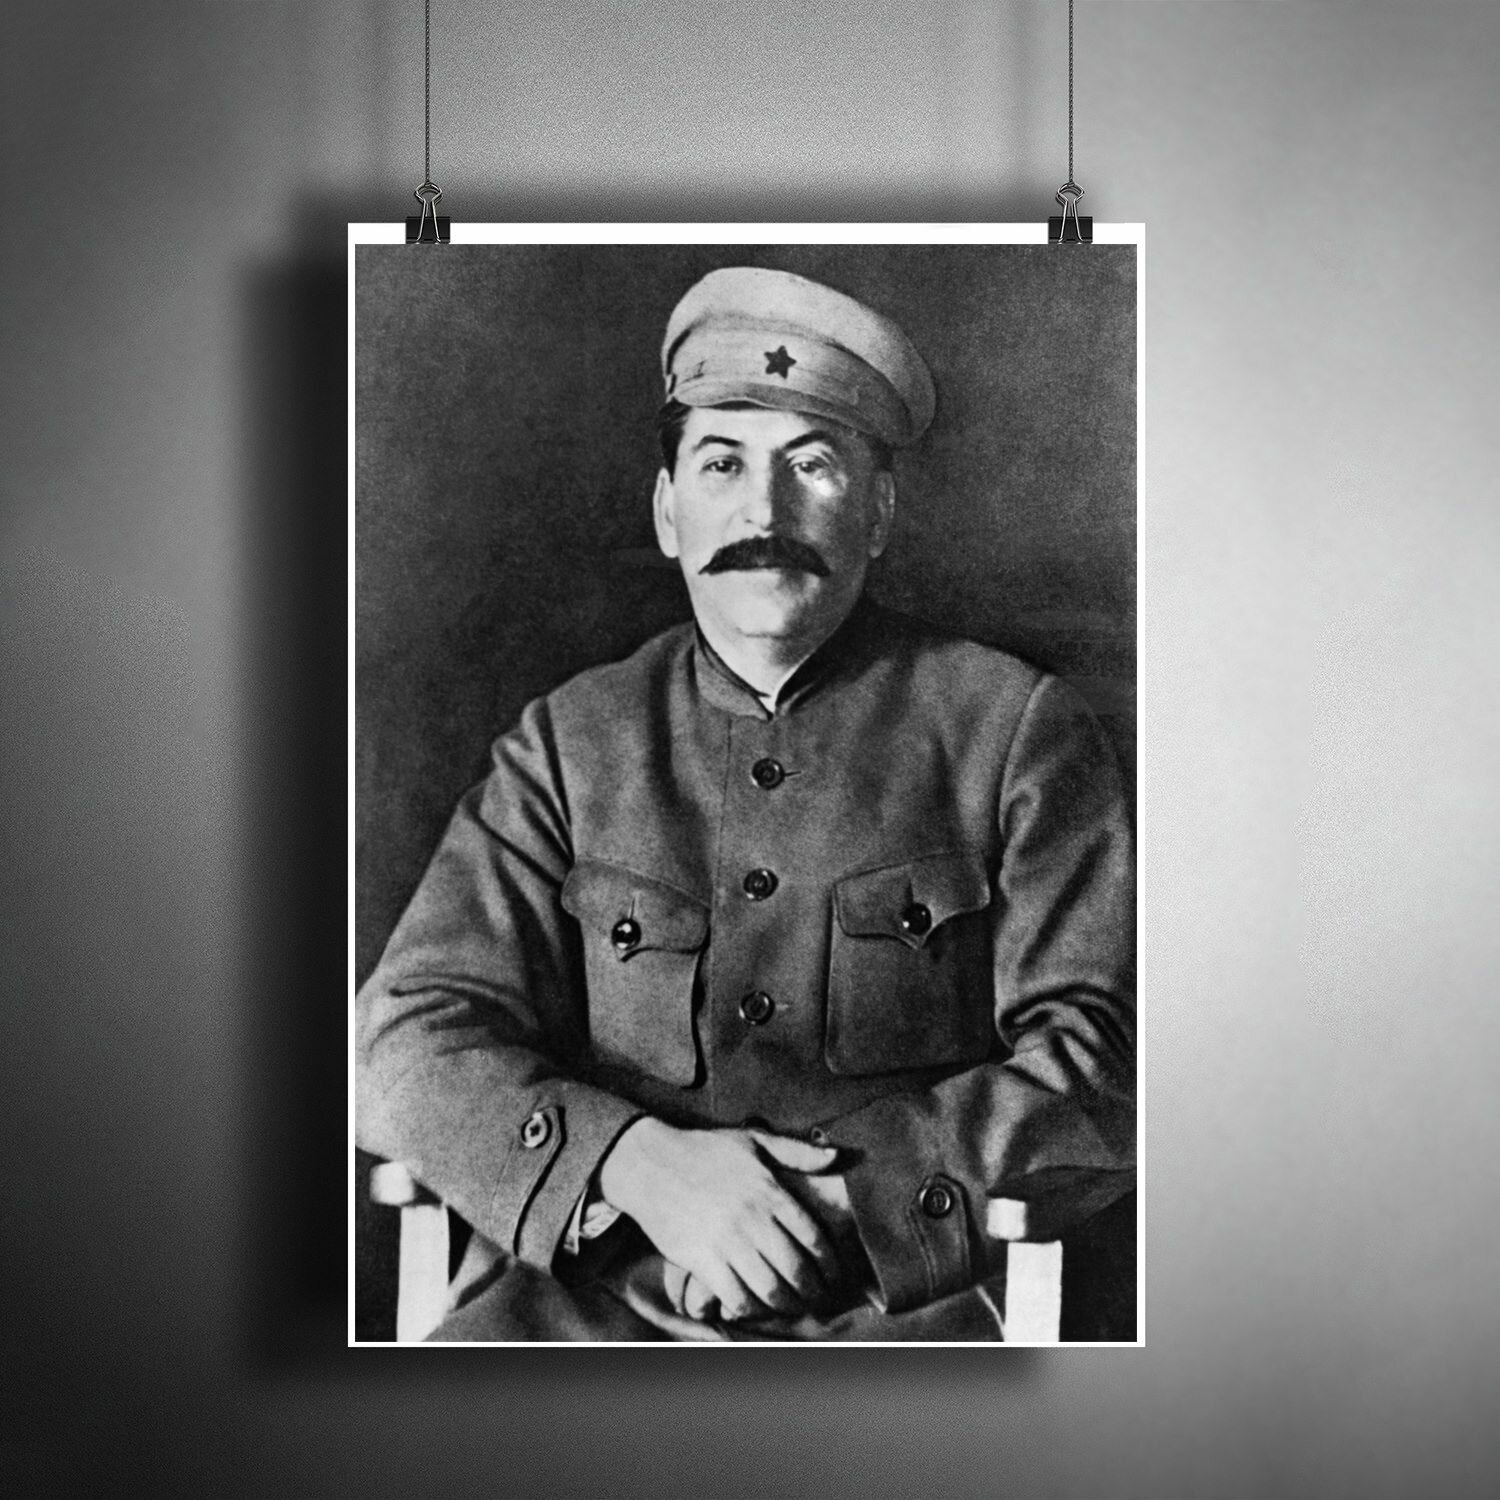 Постер плакат для интерьера "Советский плакат: "Иосиф Сталин", СССР" / Декор дома, офиса, комнаты, квартиры A3 (297 x 420 мм)